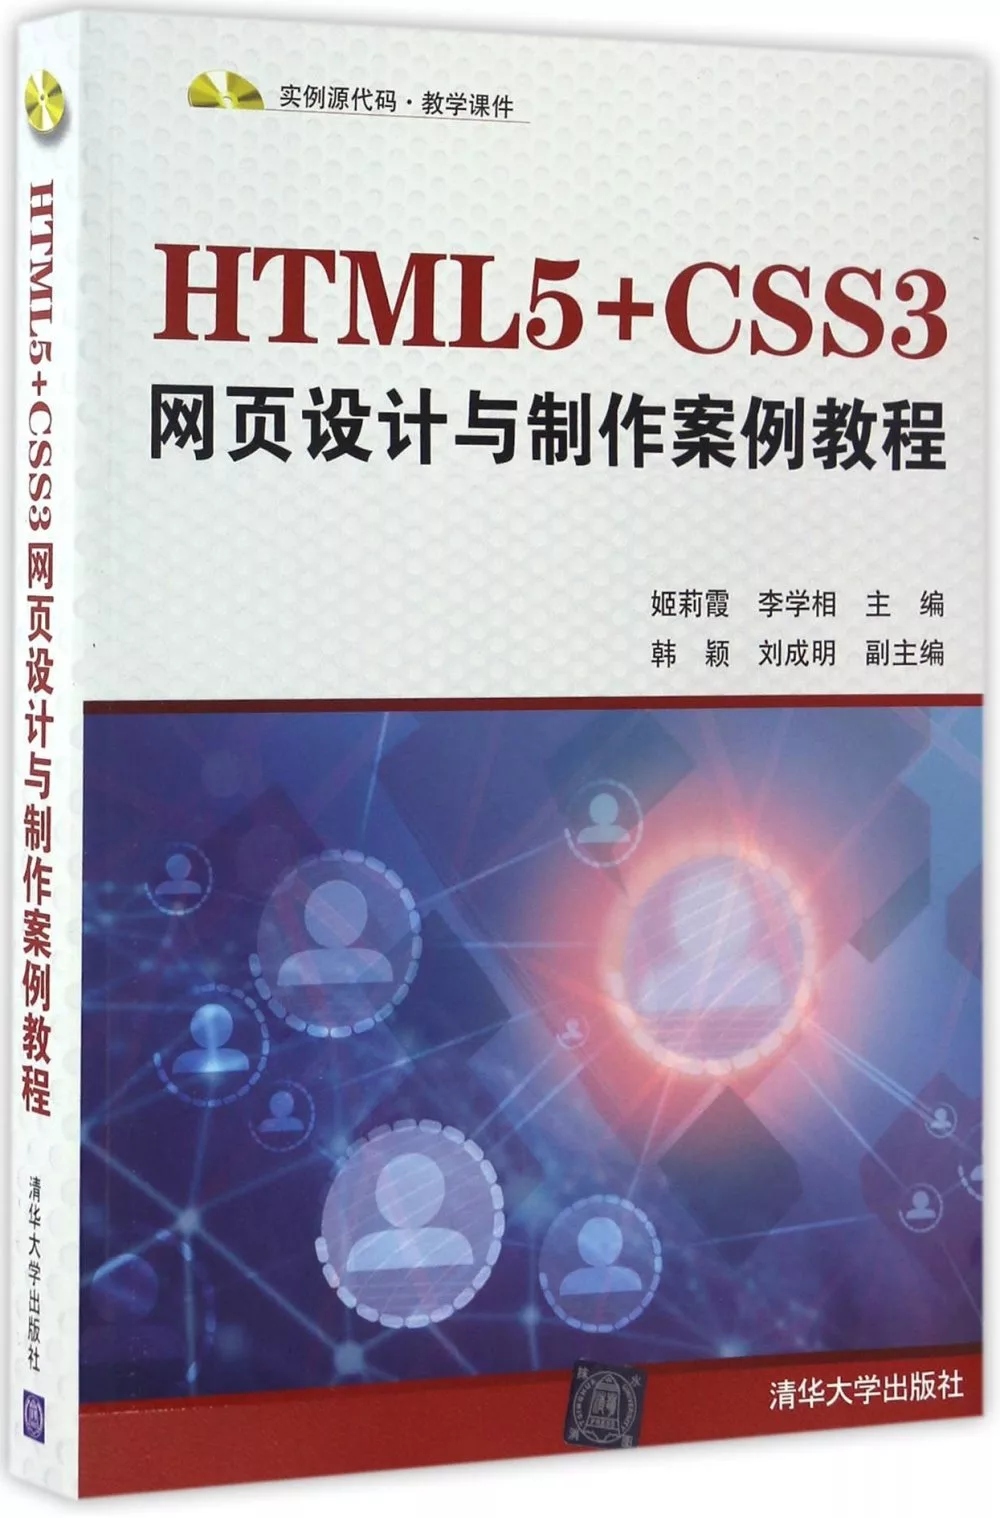 HTML5+CSS3網頁設計與制作案例教程